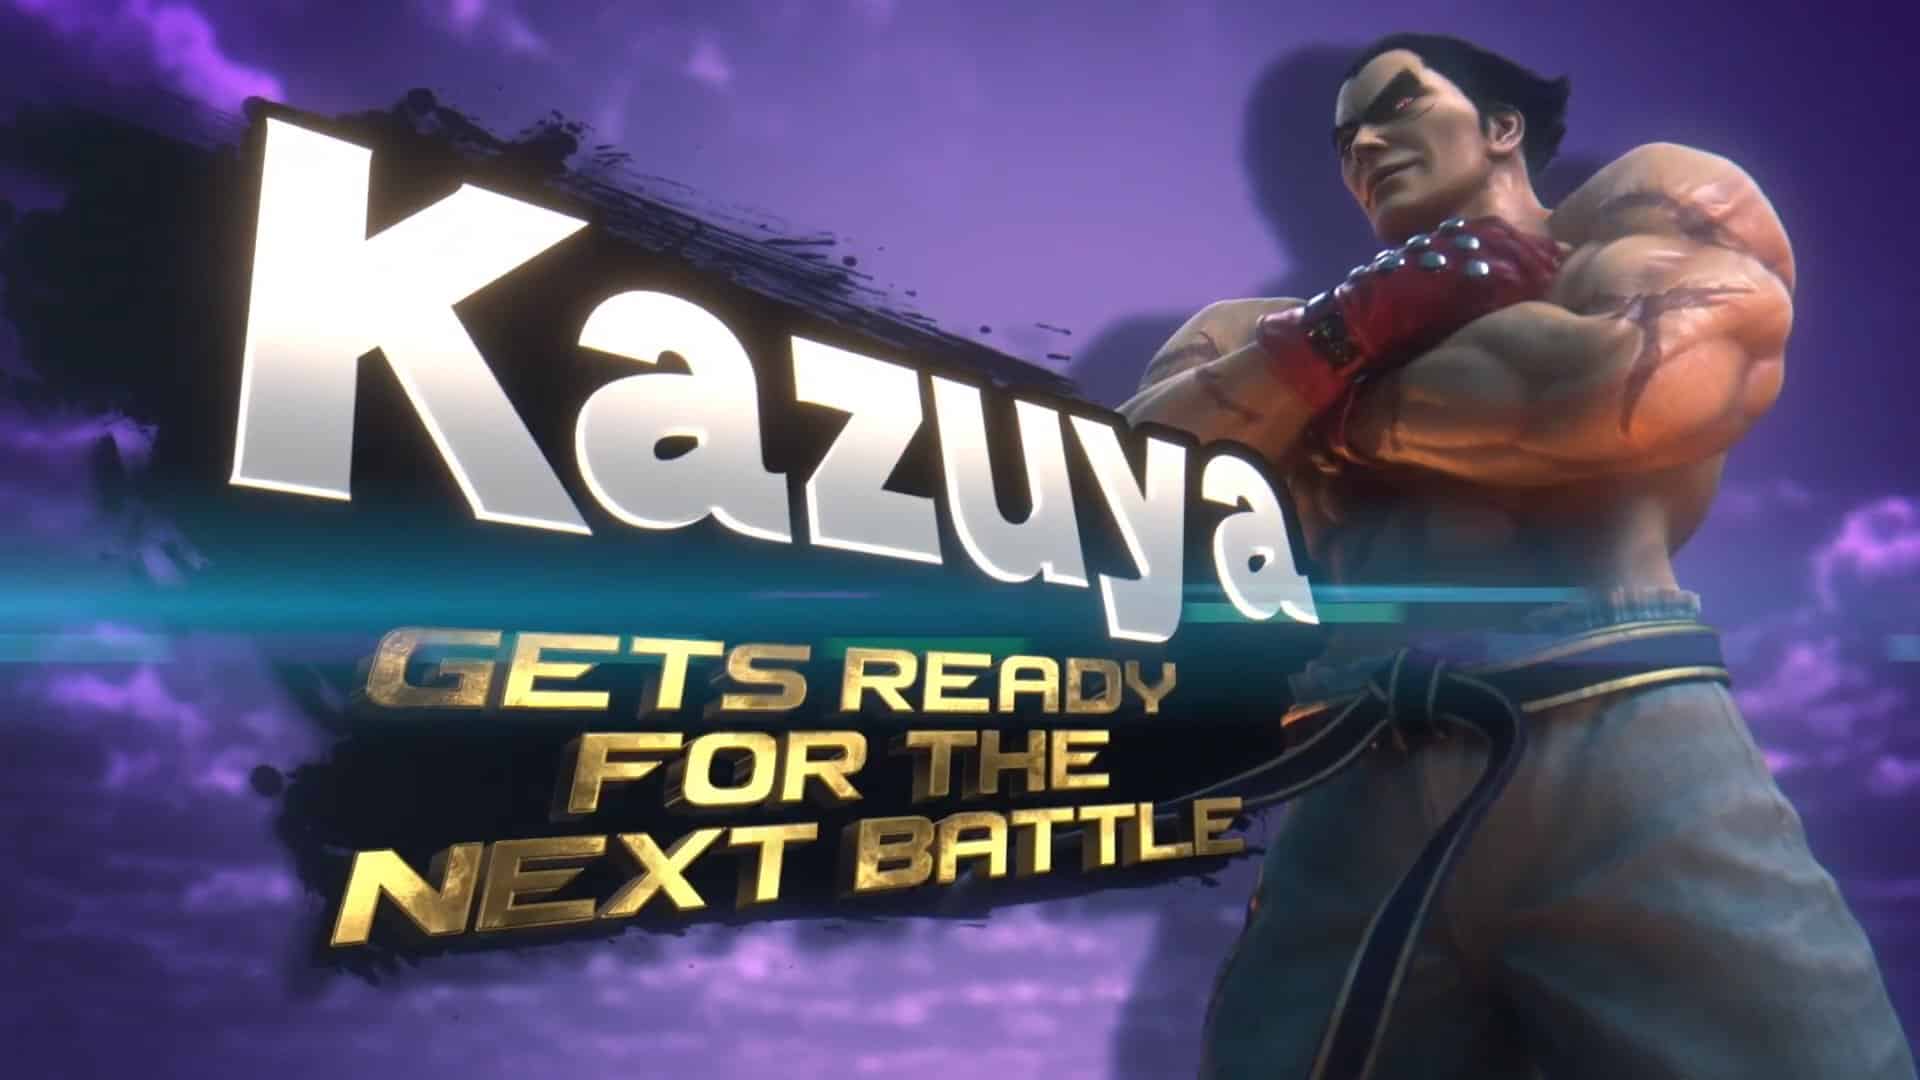 Kazuya - Super Smash Bros Ultimate